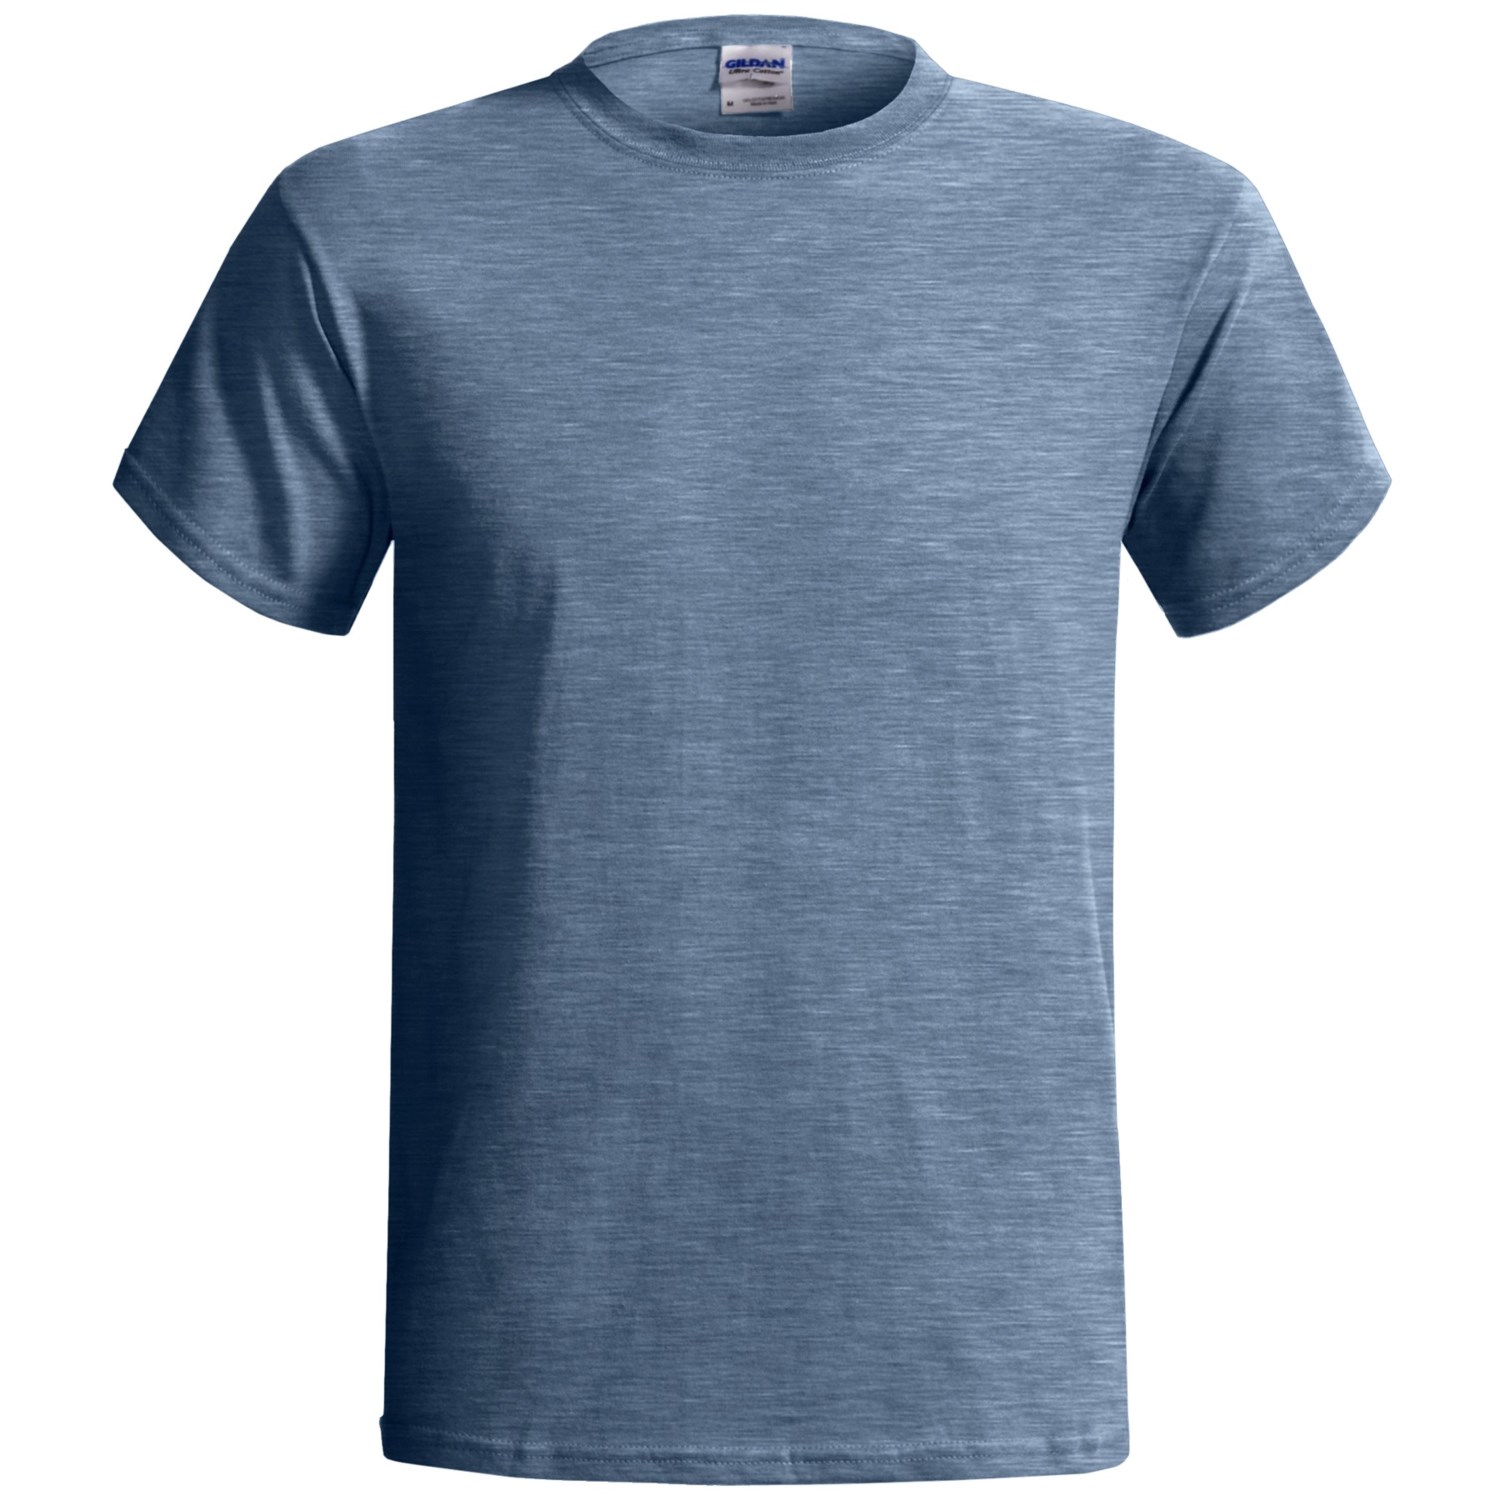 Gildan T-Shirt - Short Sleeve (For Men and Women) - Save 51%